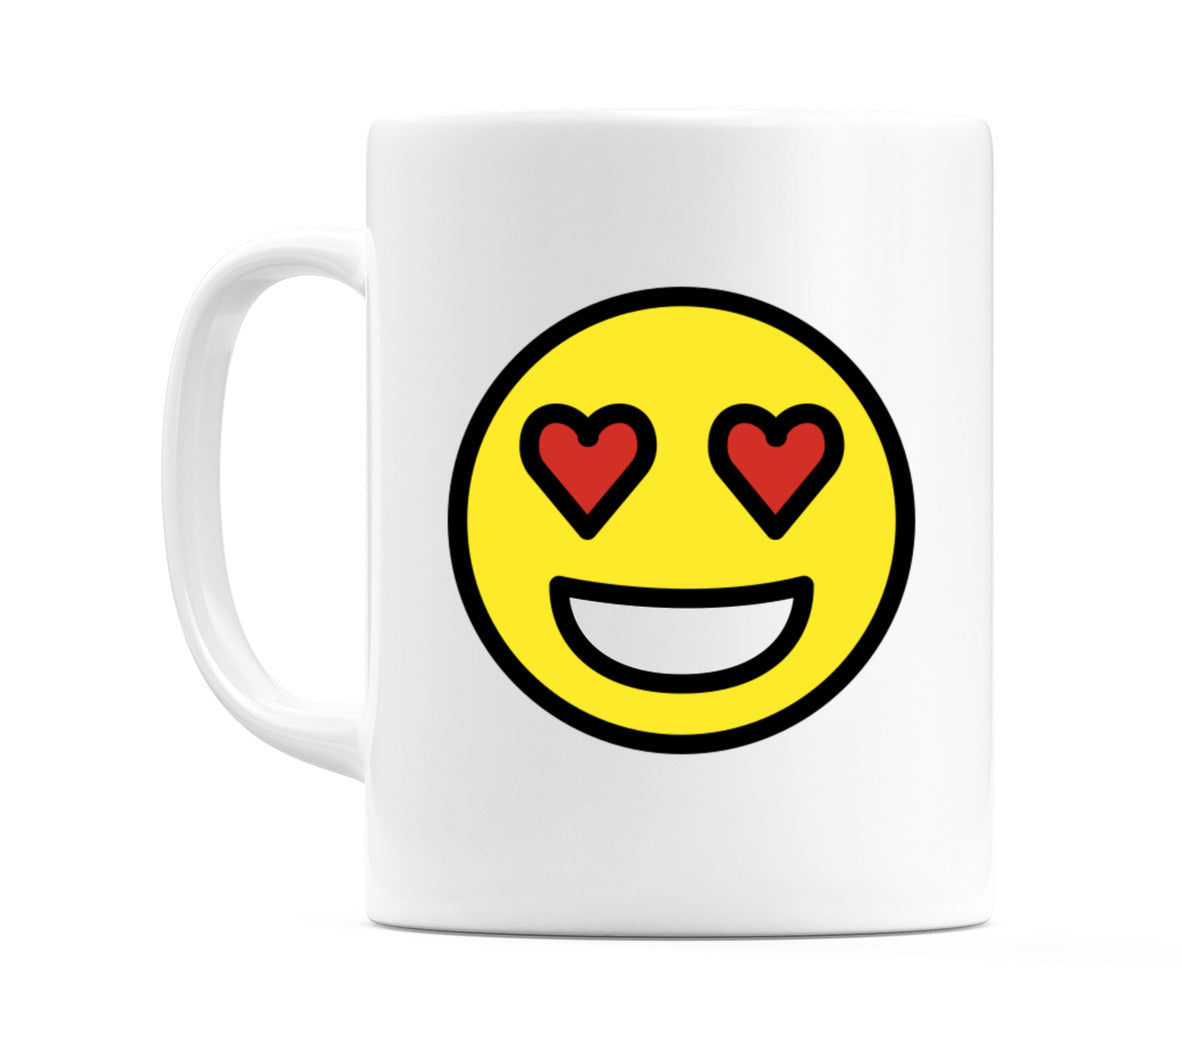 Smiling Face With Heart-Eyes Emoji Mug